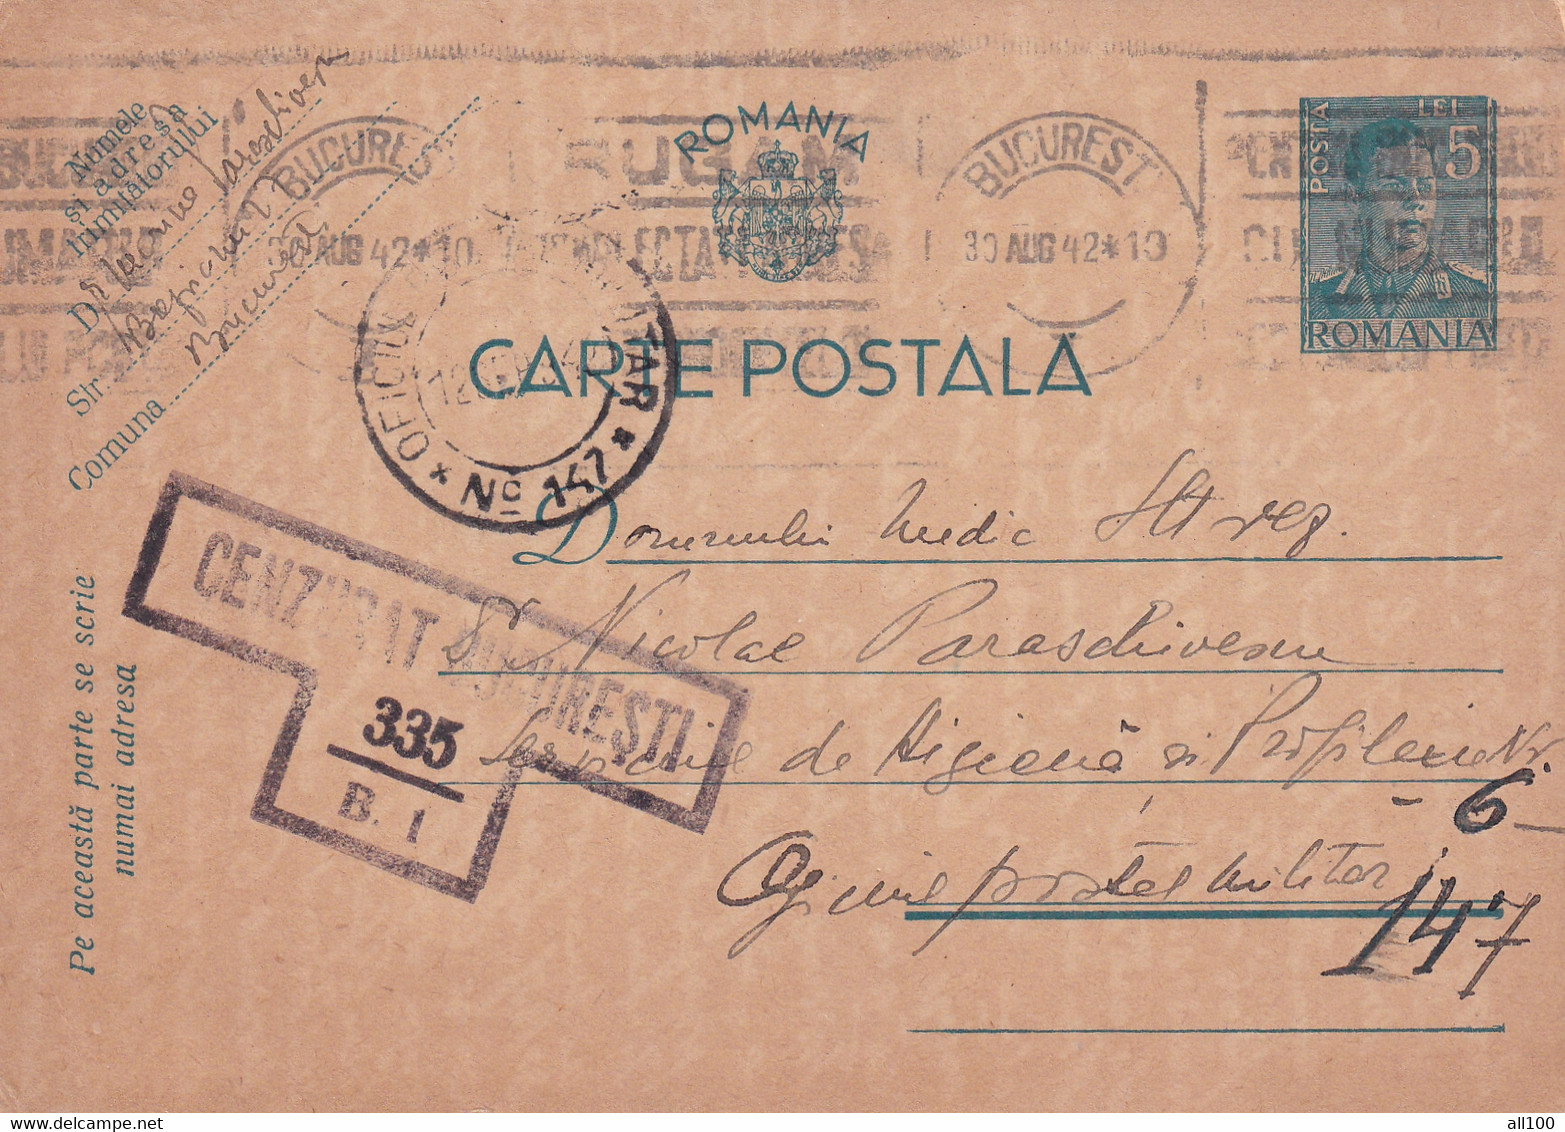 A16409 - POSTAL STATIONERY KING MICHAEL ROMANIA  CARTA POSTALA MILITARA 1943 USED  CENZORED CENZURAT BUCURESTI - 2. Weltkrieg (Briefe)